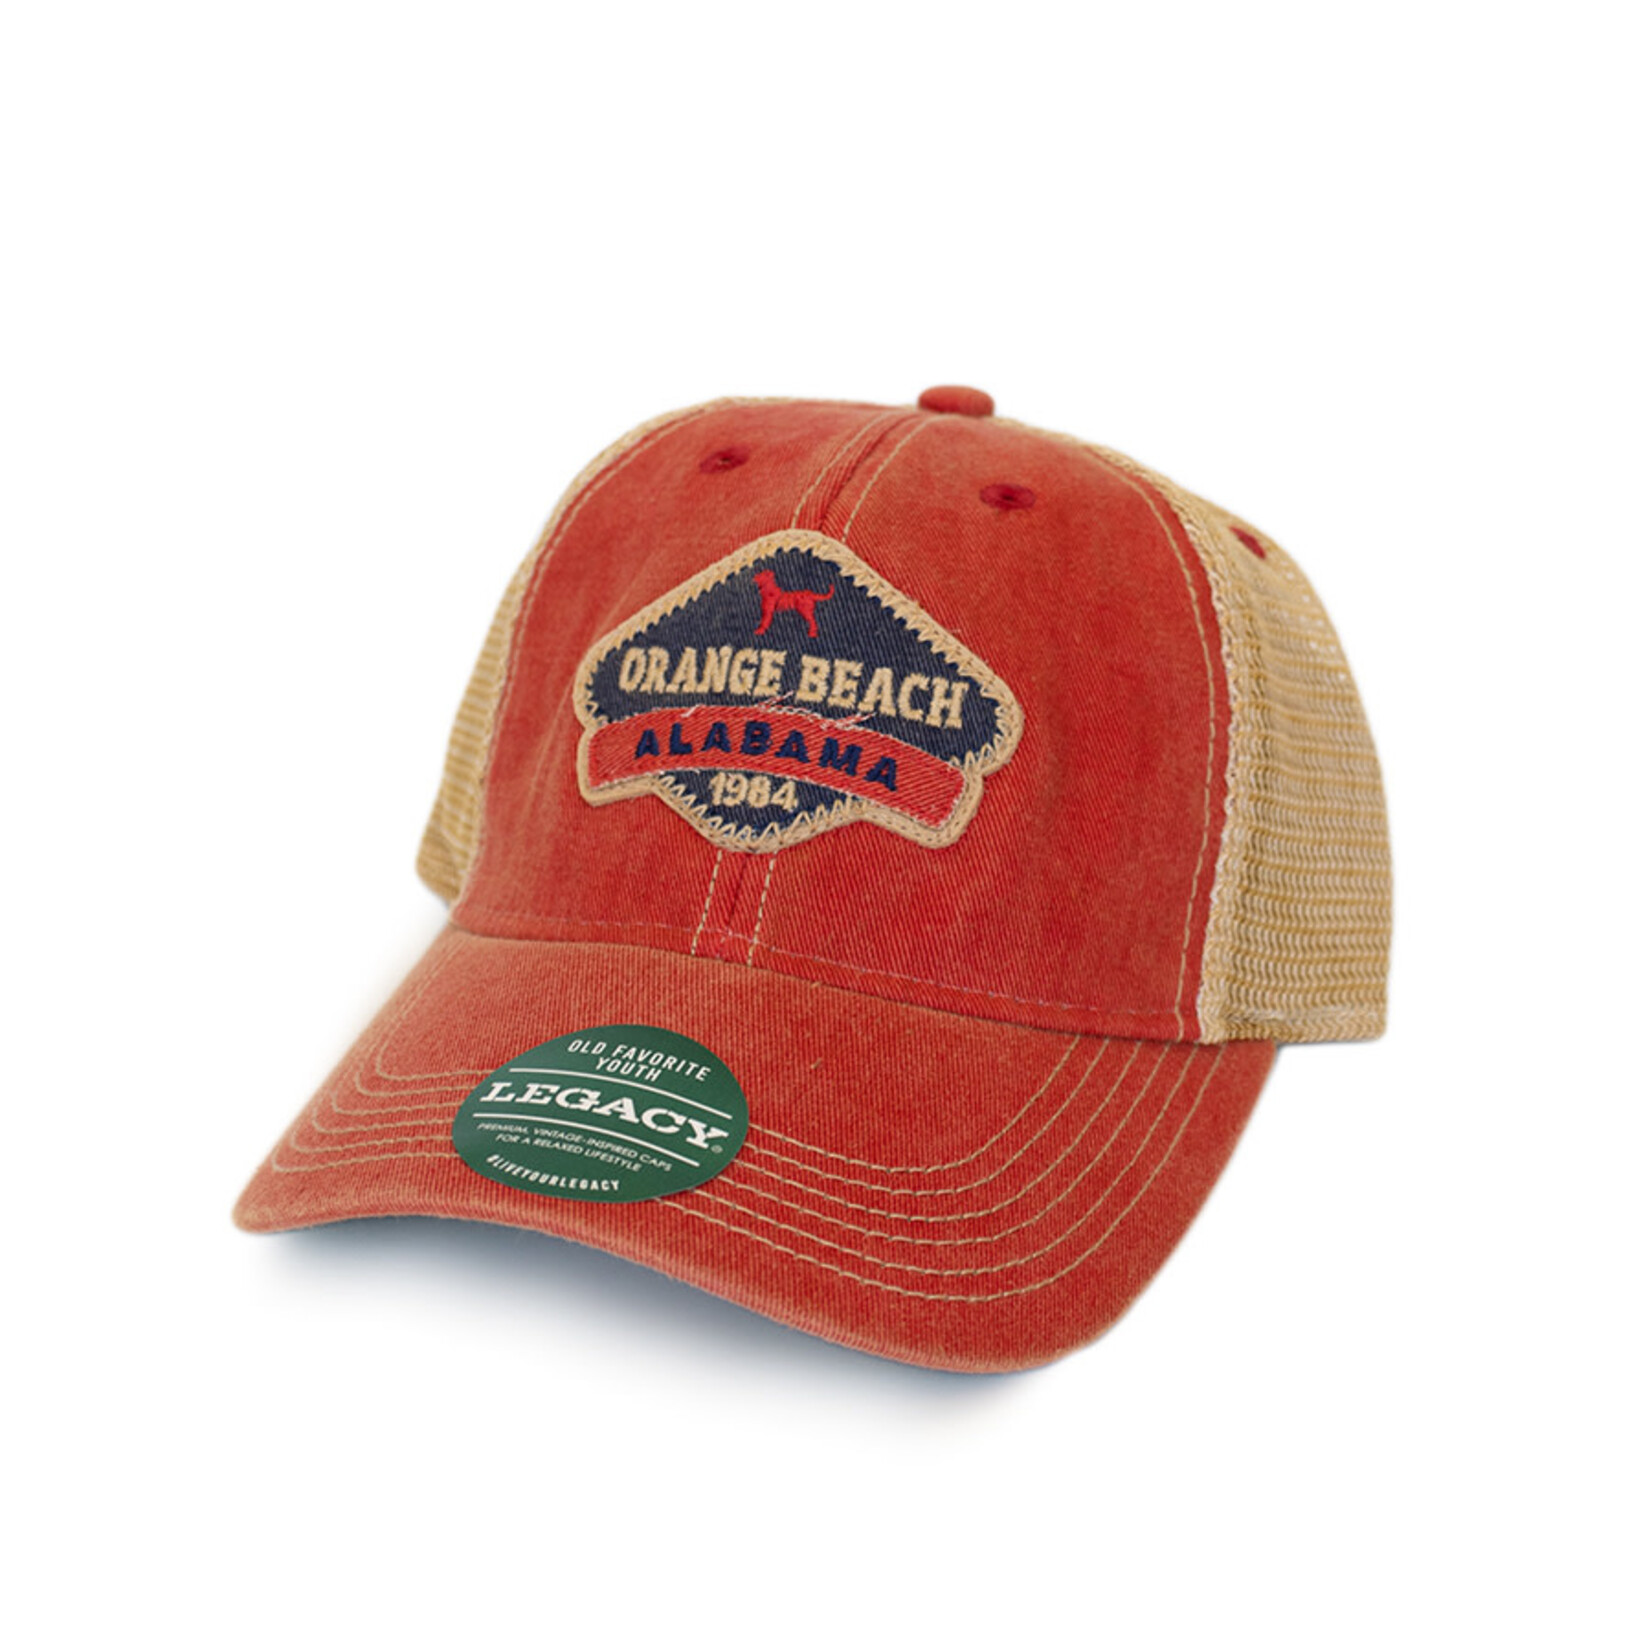 L2 Brands Beach Bub Youth Trucker Hat